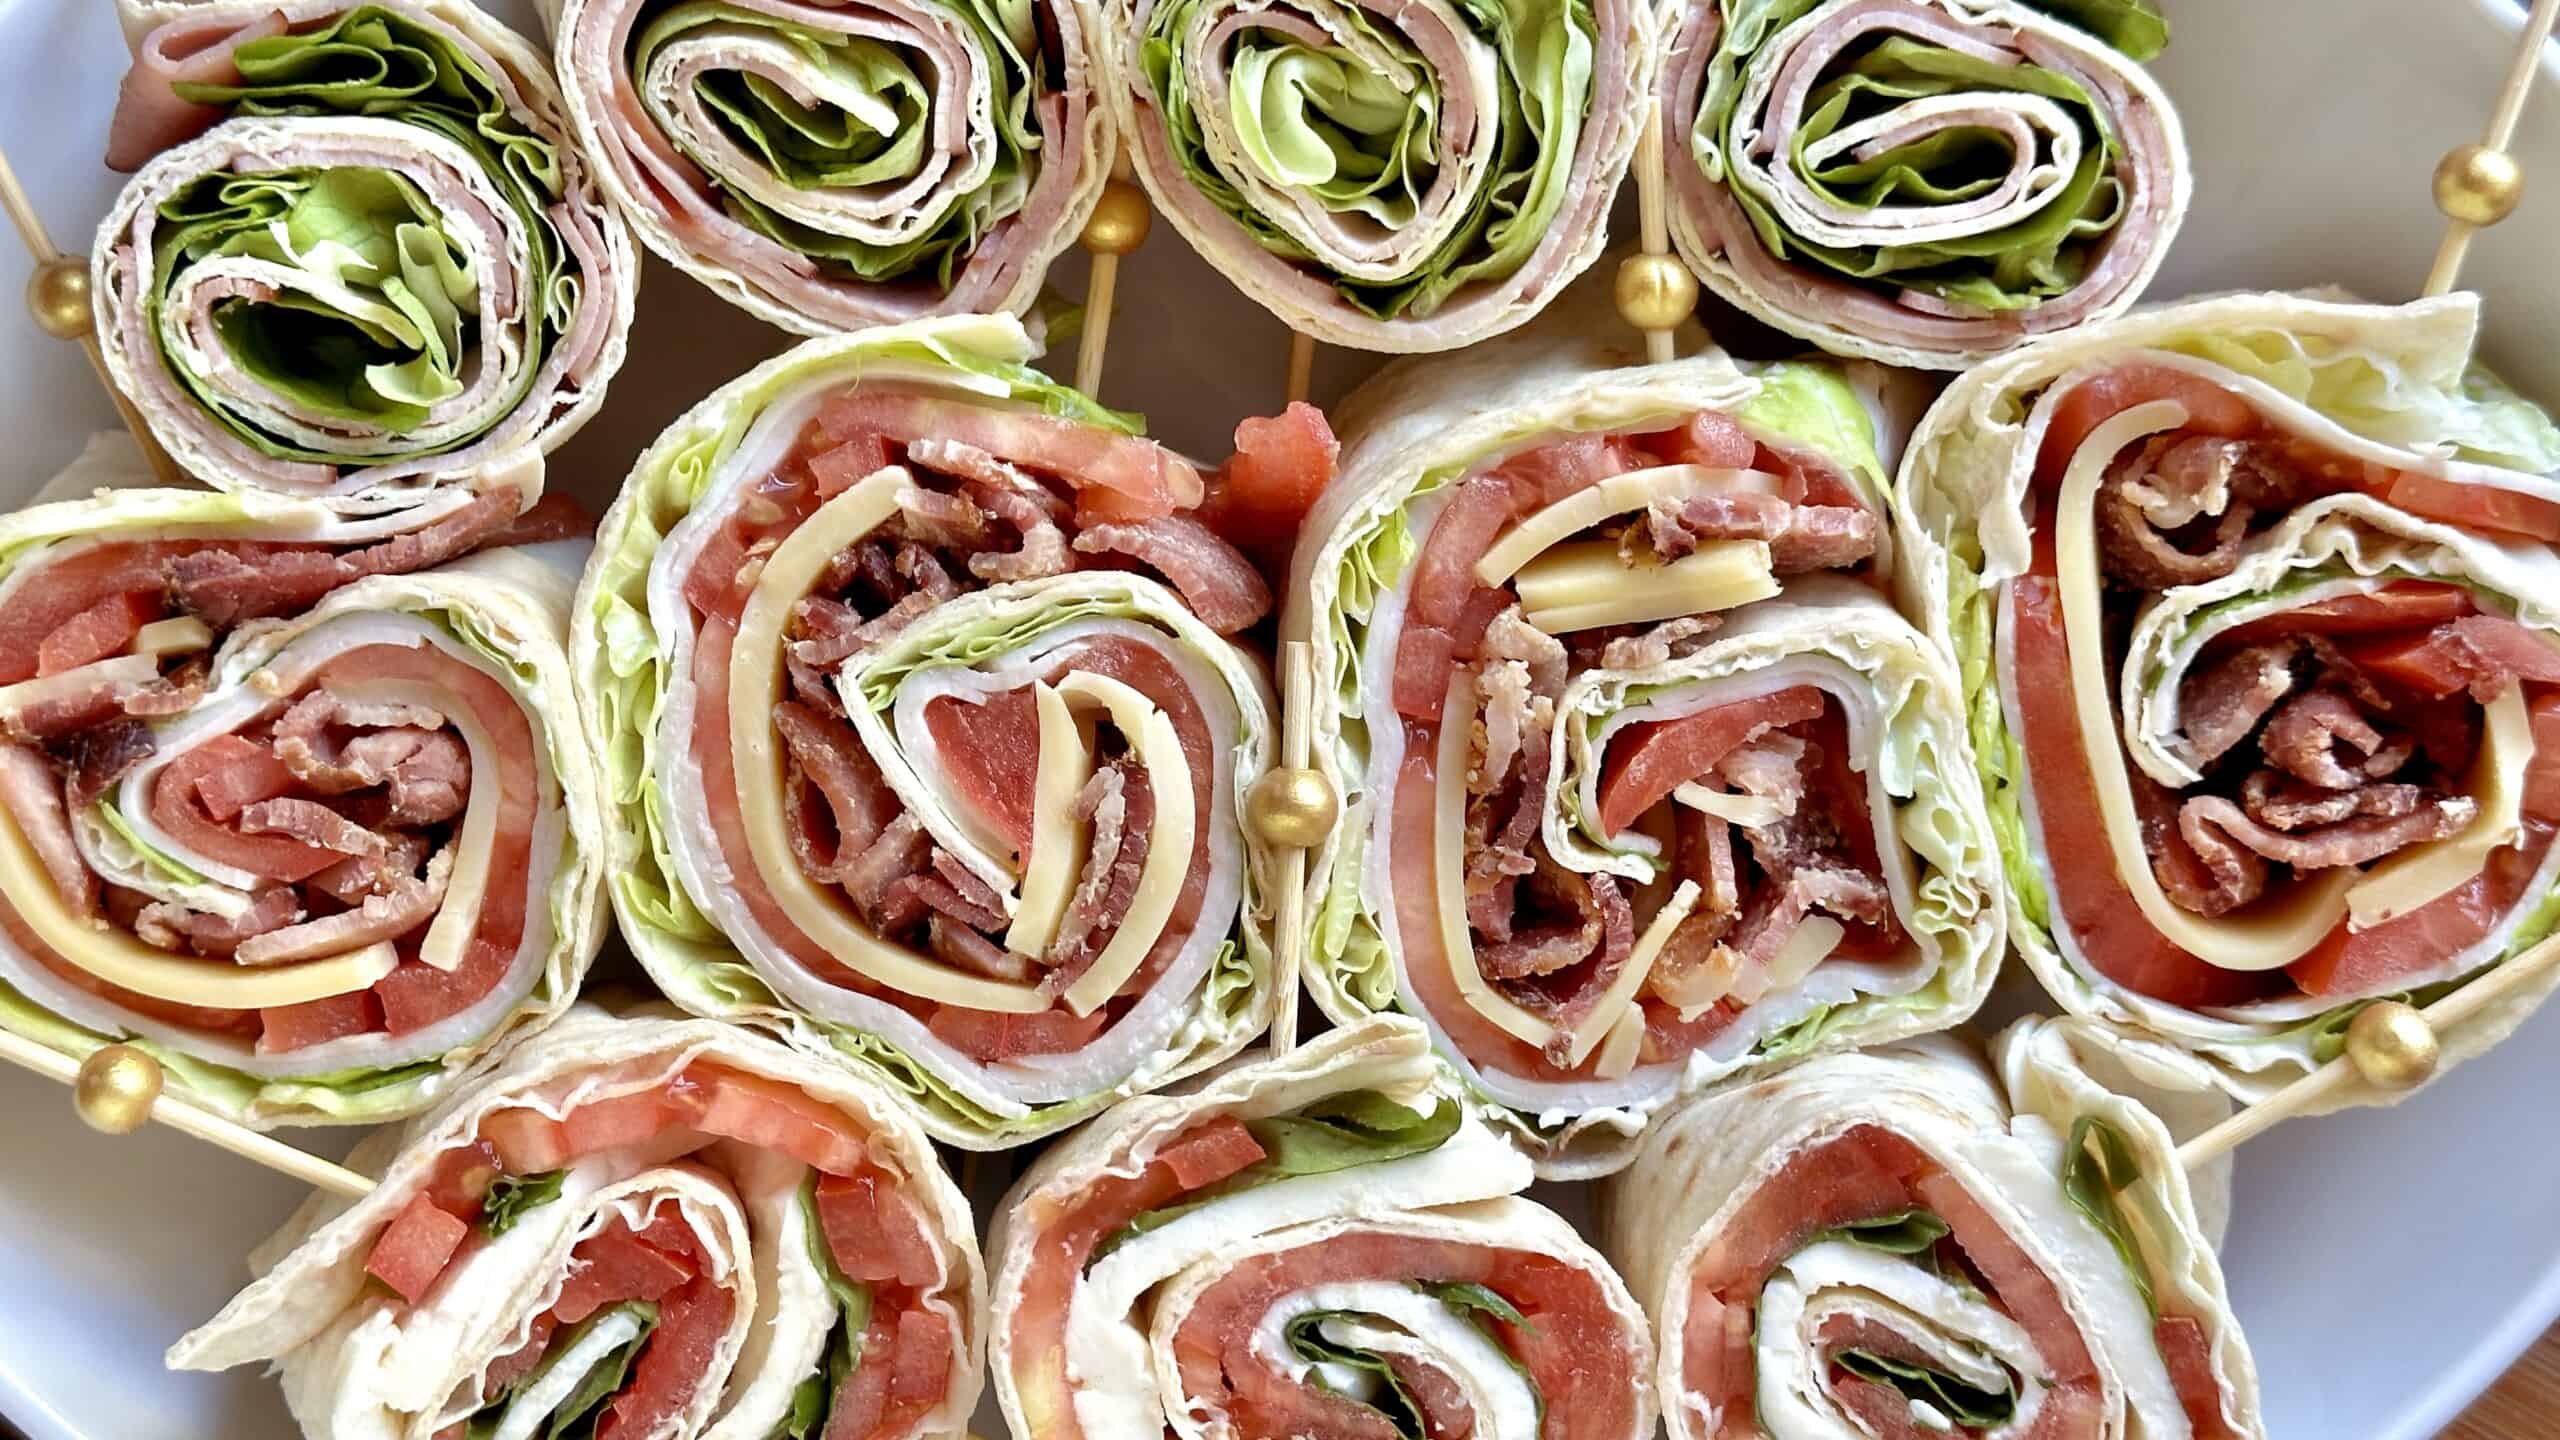 How to Make Pinwheel Sandwiches (Club, Caprese, Ham and Cheese & More)